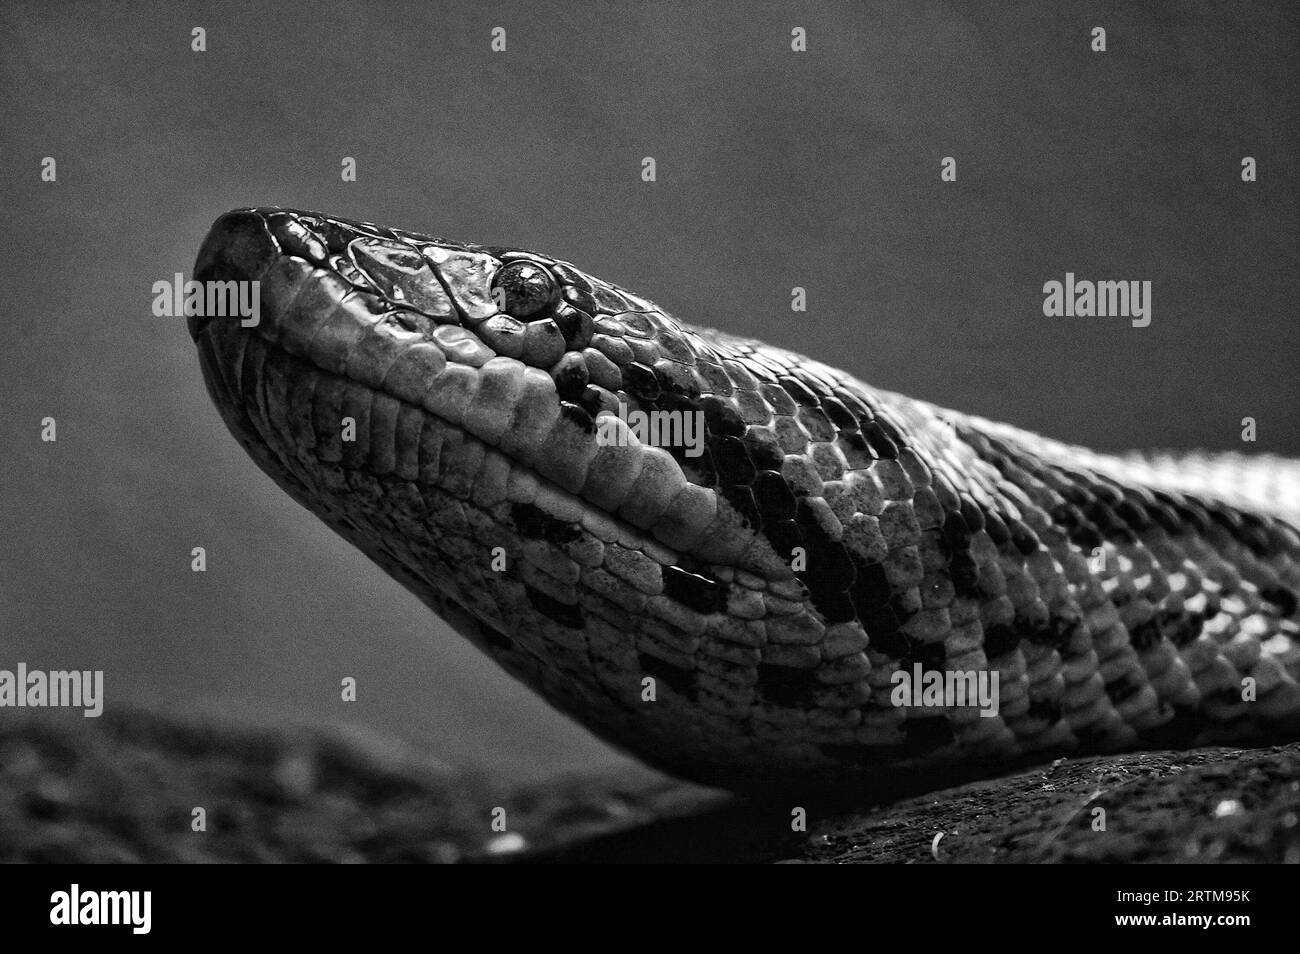 BoA, reptiles, serpents,Boa Boa (Latin) - sous-famille de serpents boas inoffensifs Banque D'Images